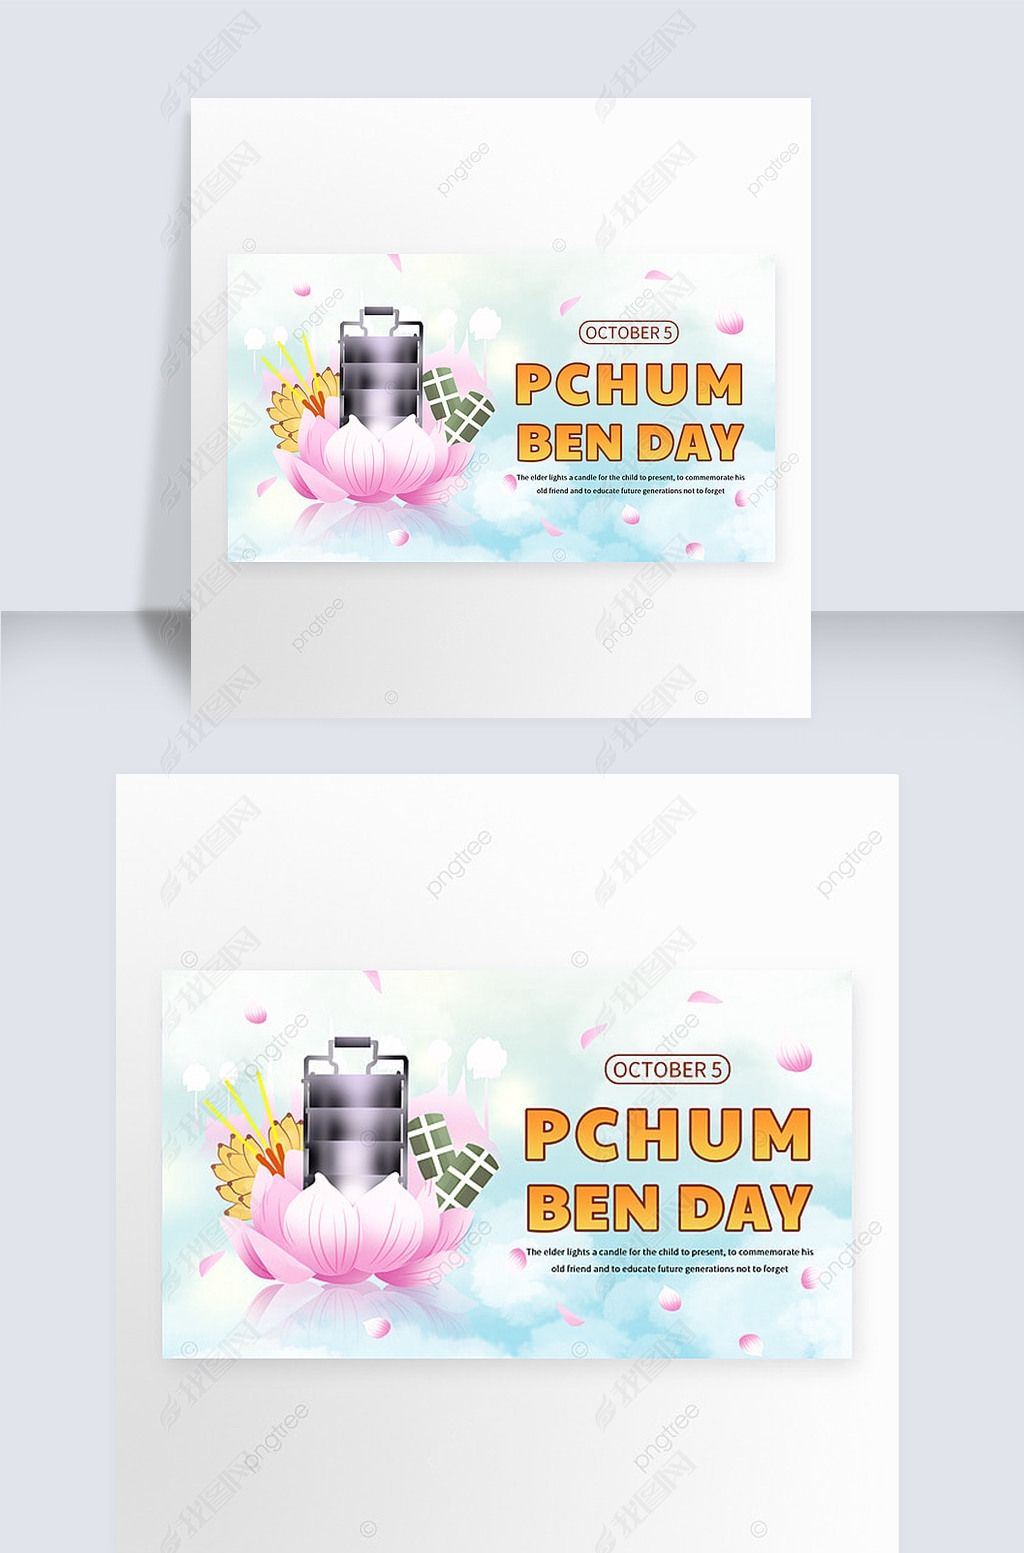 pchum ben day gradually changing dream banner